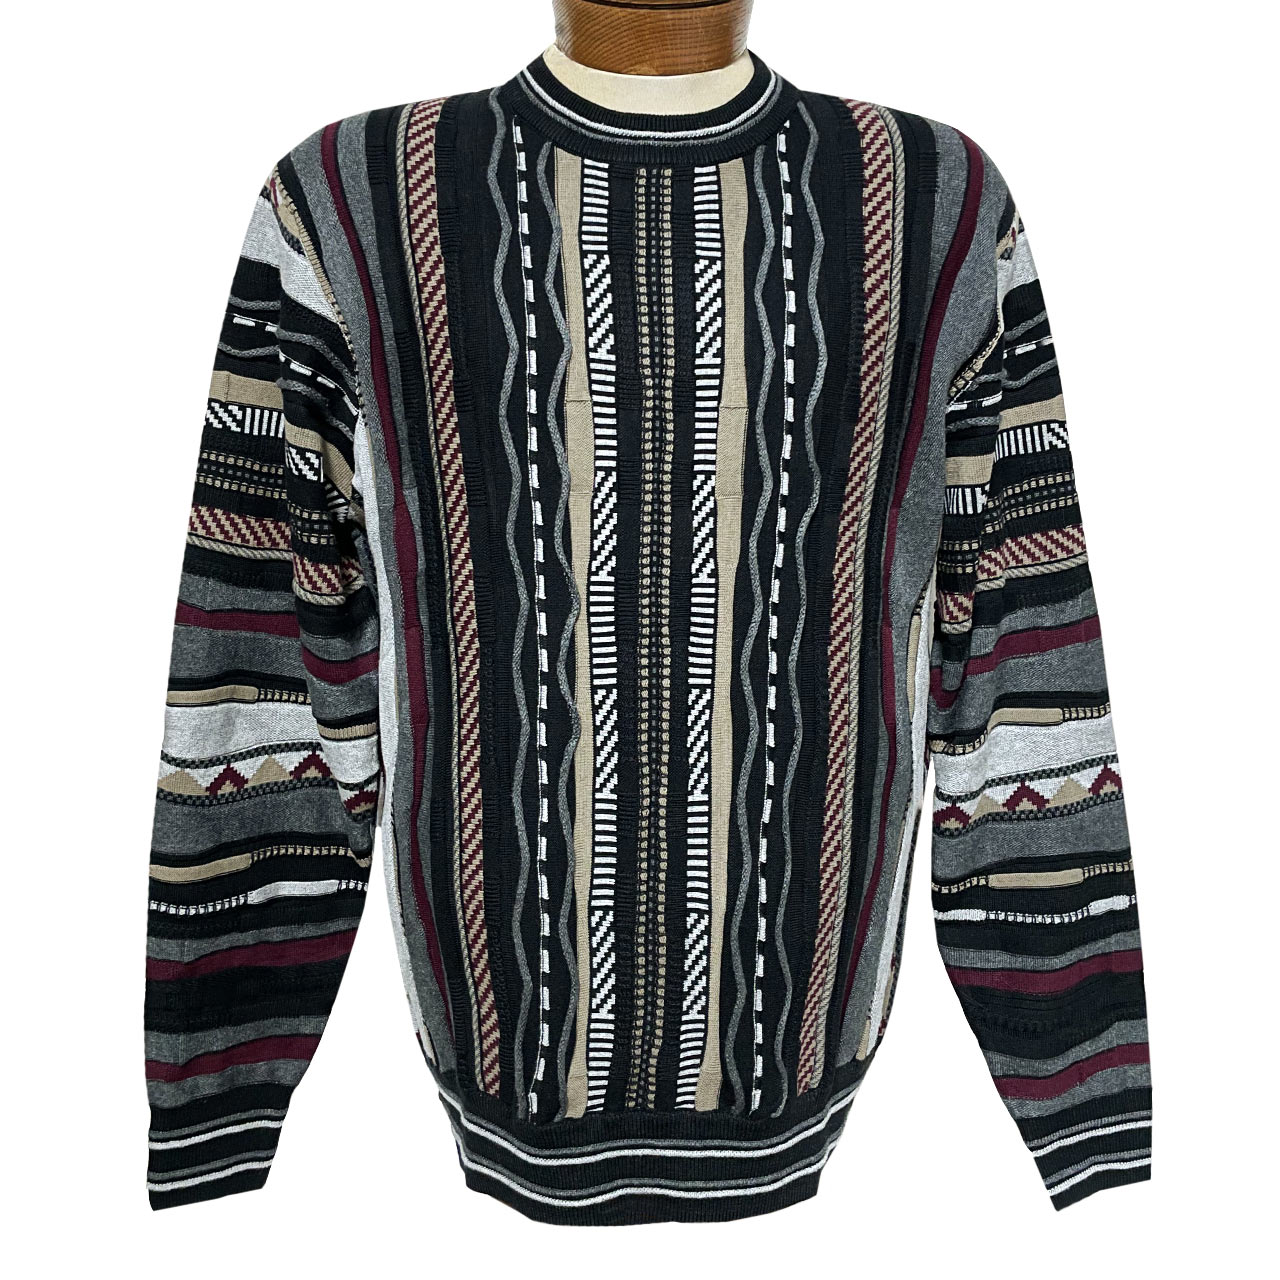 Men's F/X Fusion Vertical Multi Stitch Textured Novelty Crew Neck Sweater #7036 Black